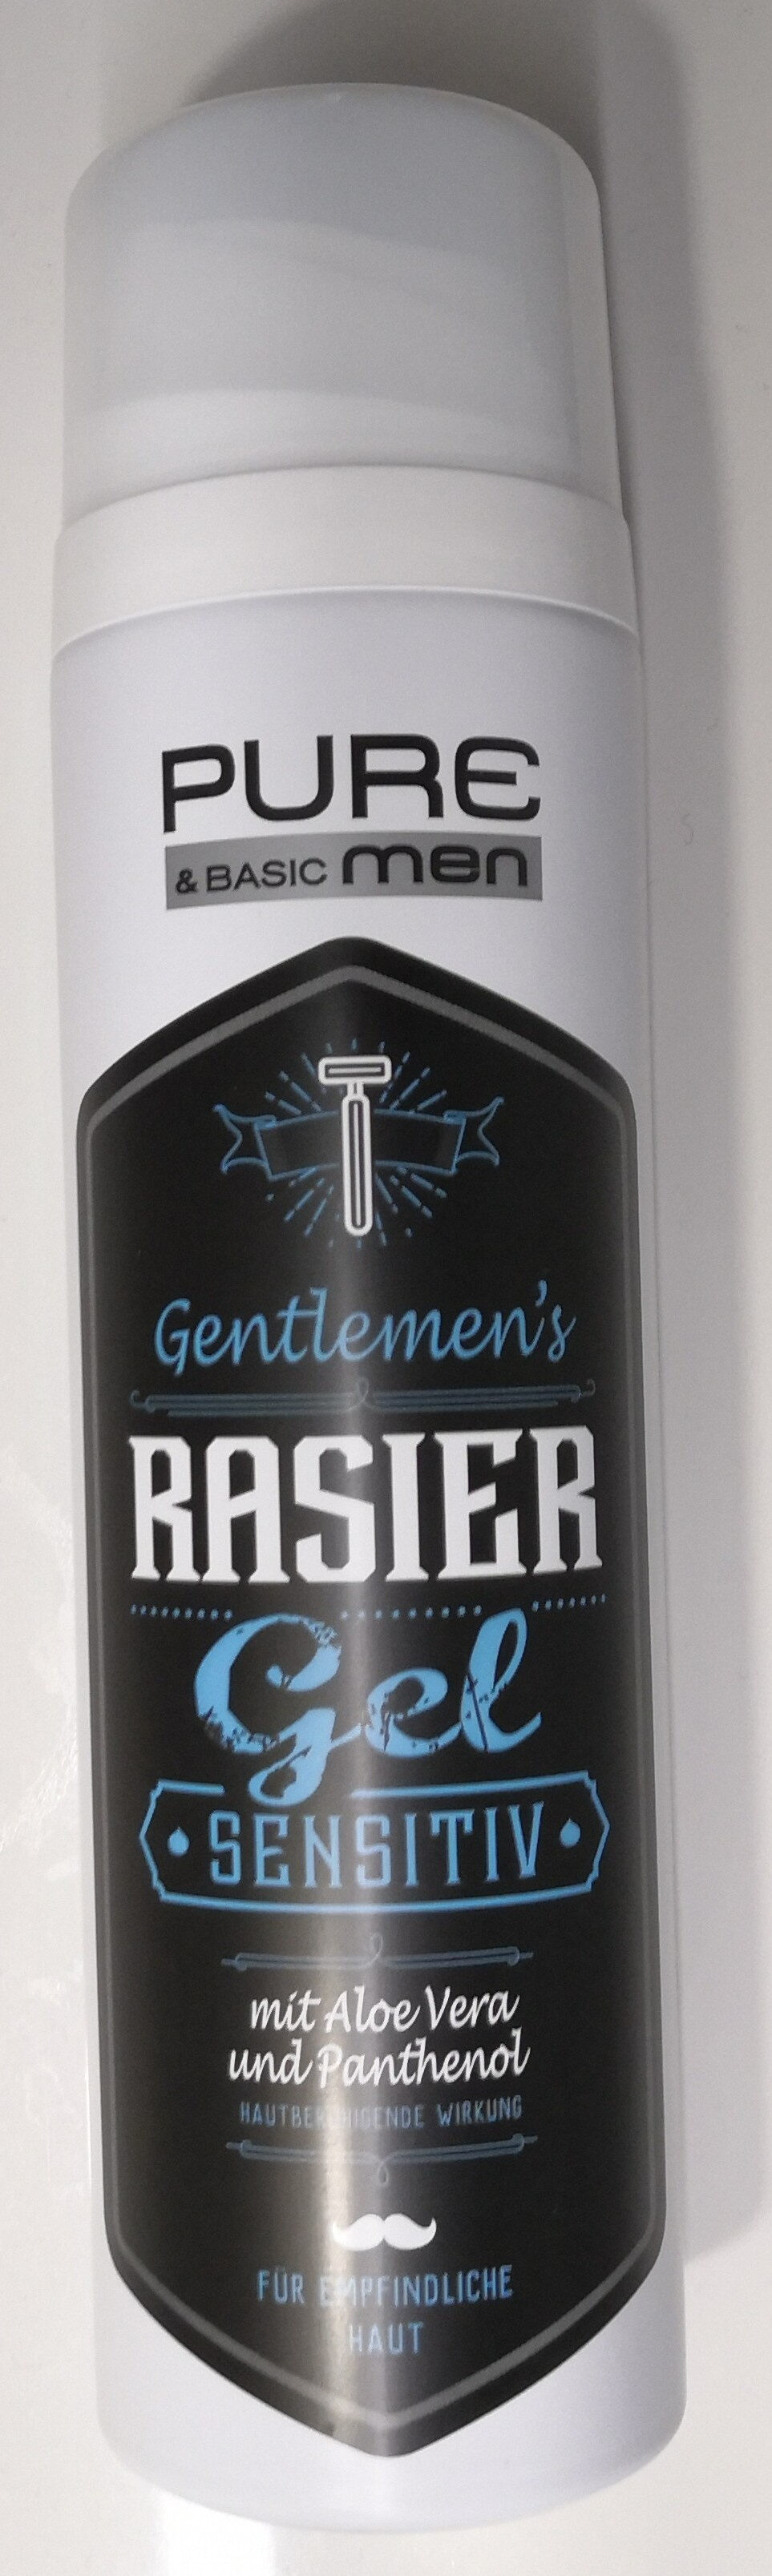 Gentlemen's Rasiergel, sensitiv mit Aloe Vera & Panthenol - Produit - de